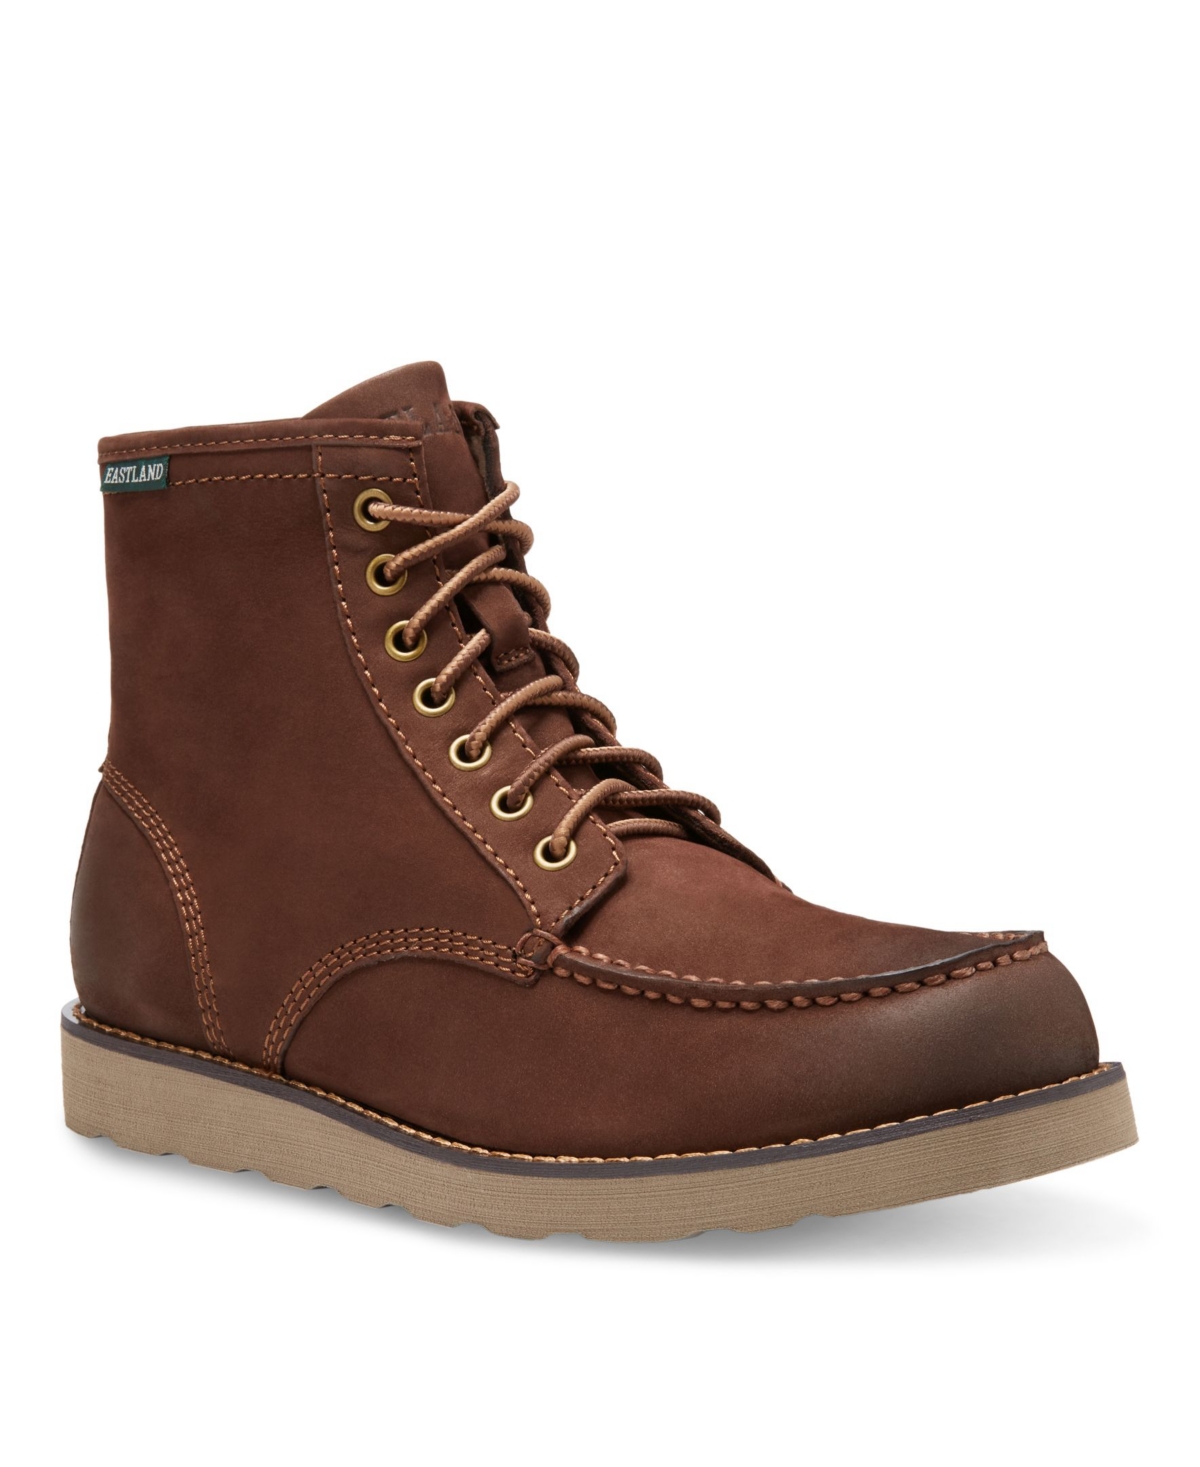 Men's Lumber Up Boots - Brown